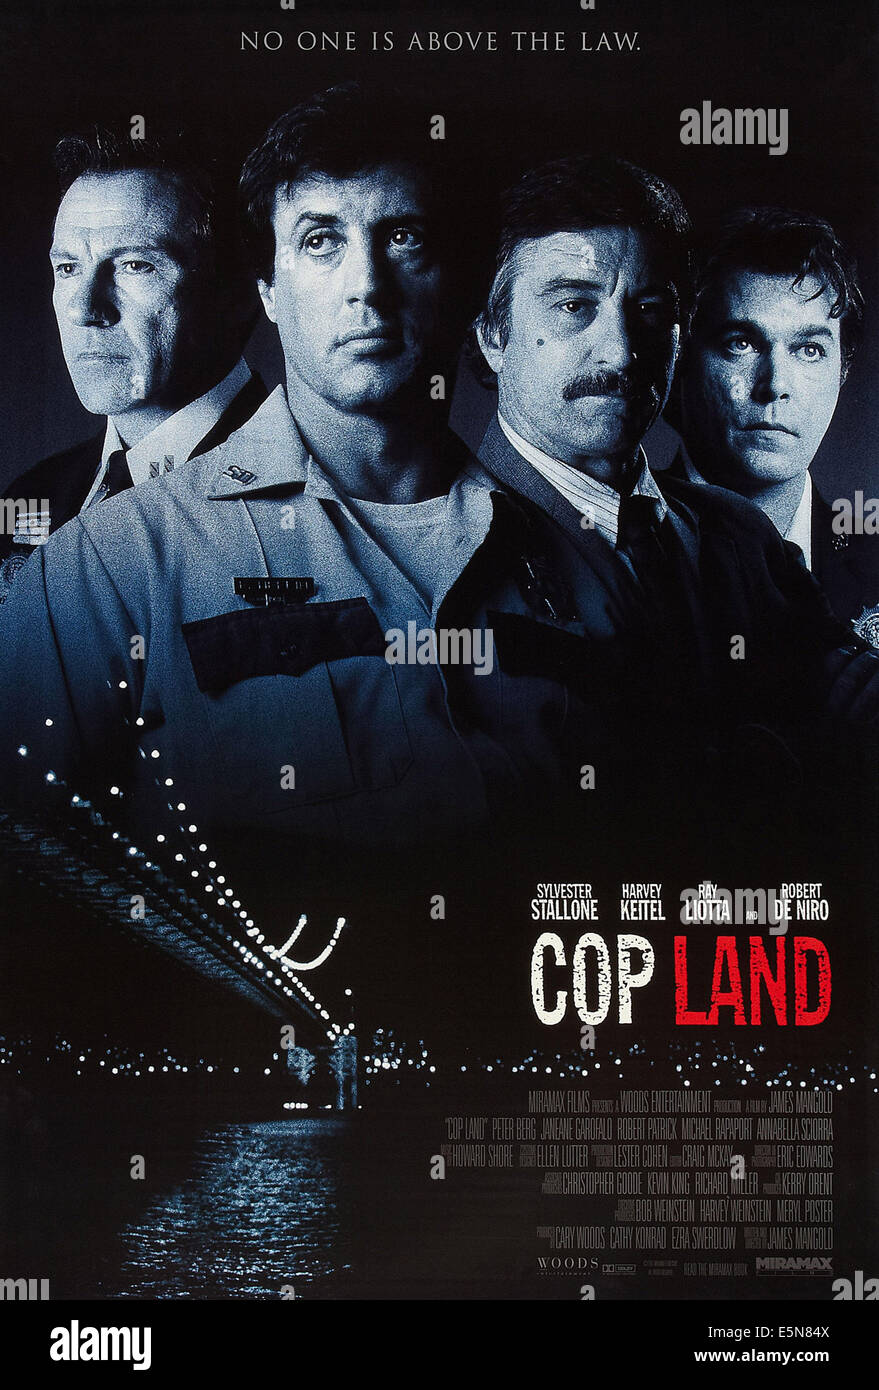 COP LAND, U.S. poster, from left: Harvey Keitel, Sylvester Stallone, Robert De Niro, Ray Liotta, 1997. ©Miramax/courtesy Stock Photo